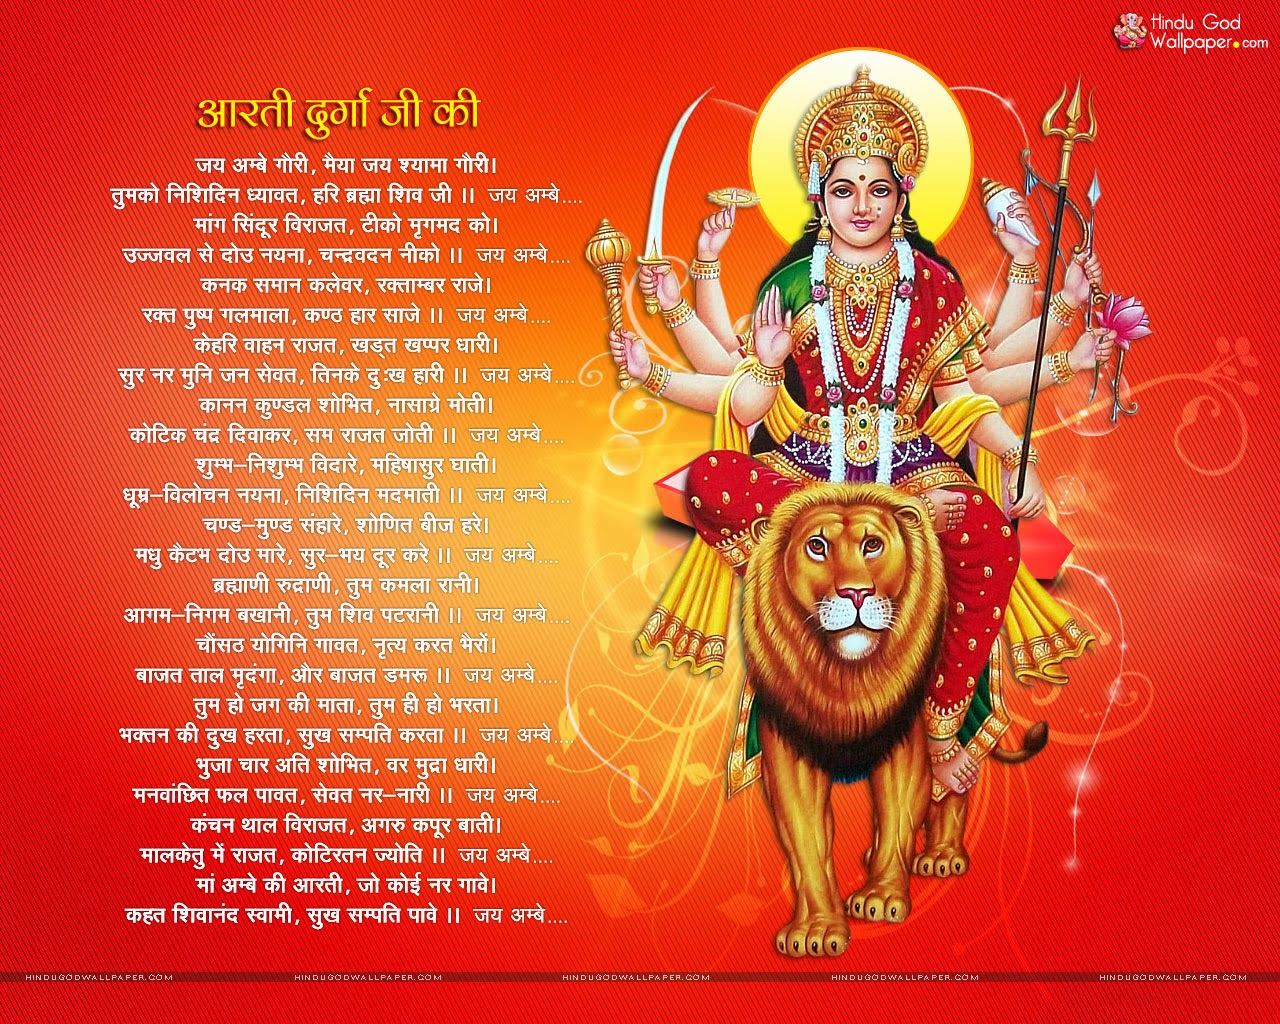 AARTI-POOJA | Hindu God Wallpapers Download